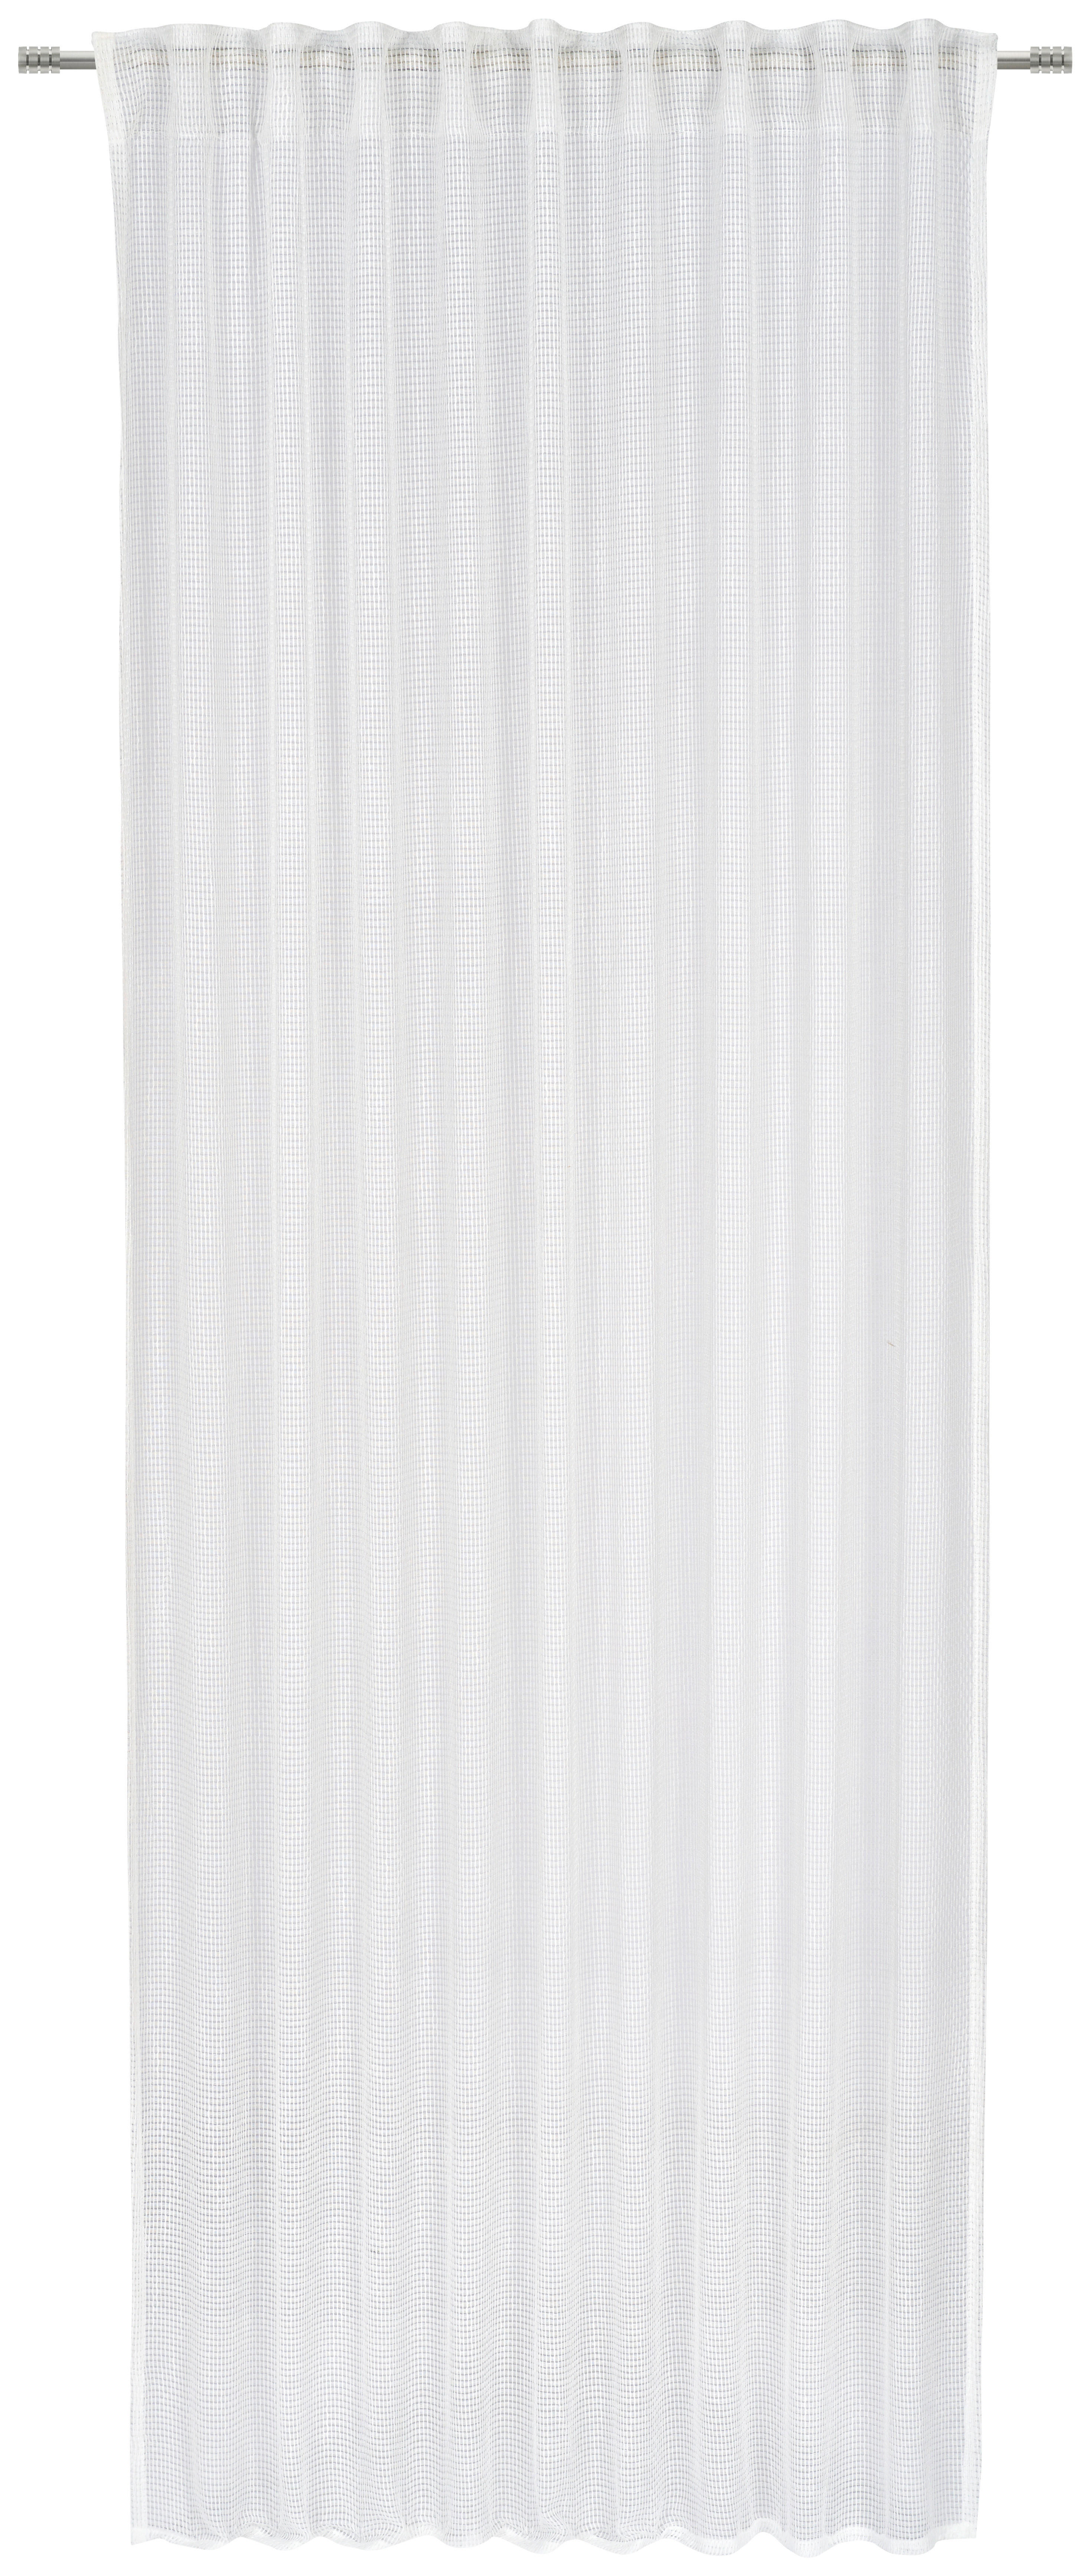 FERTIGVORHANG halbtransparent 135/245 cm   - Creme, Design, Textil (135/245cm) - Esposa